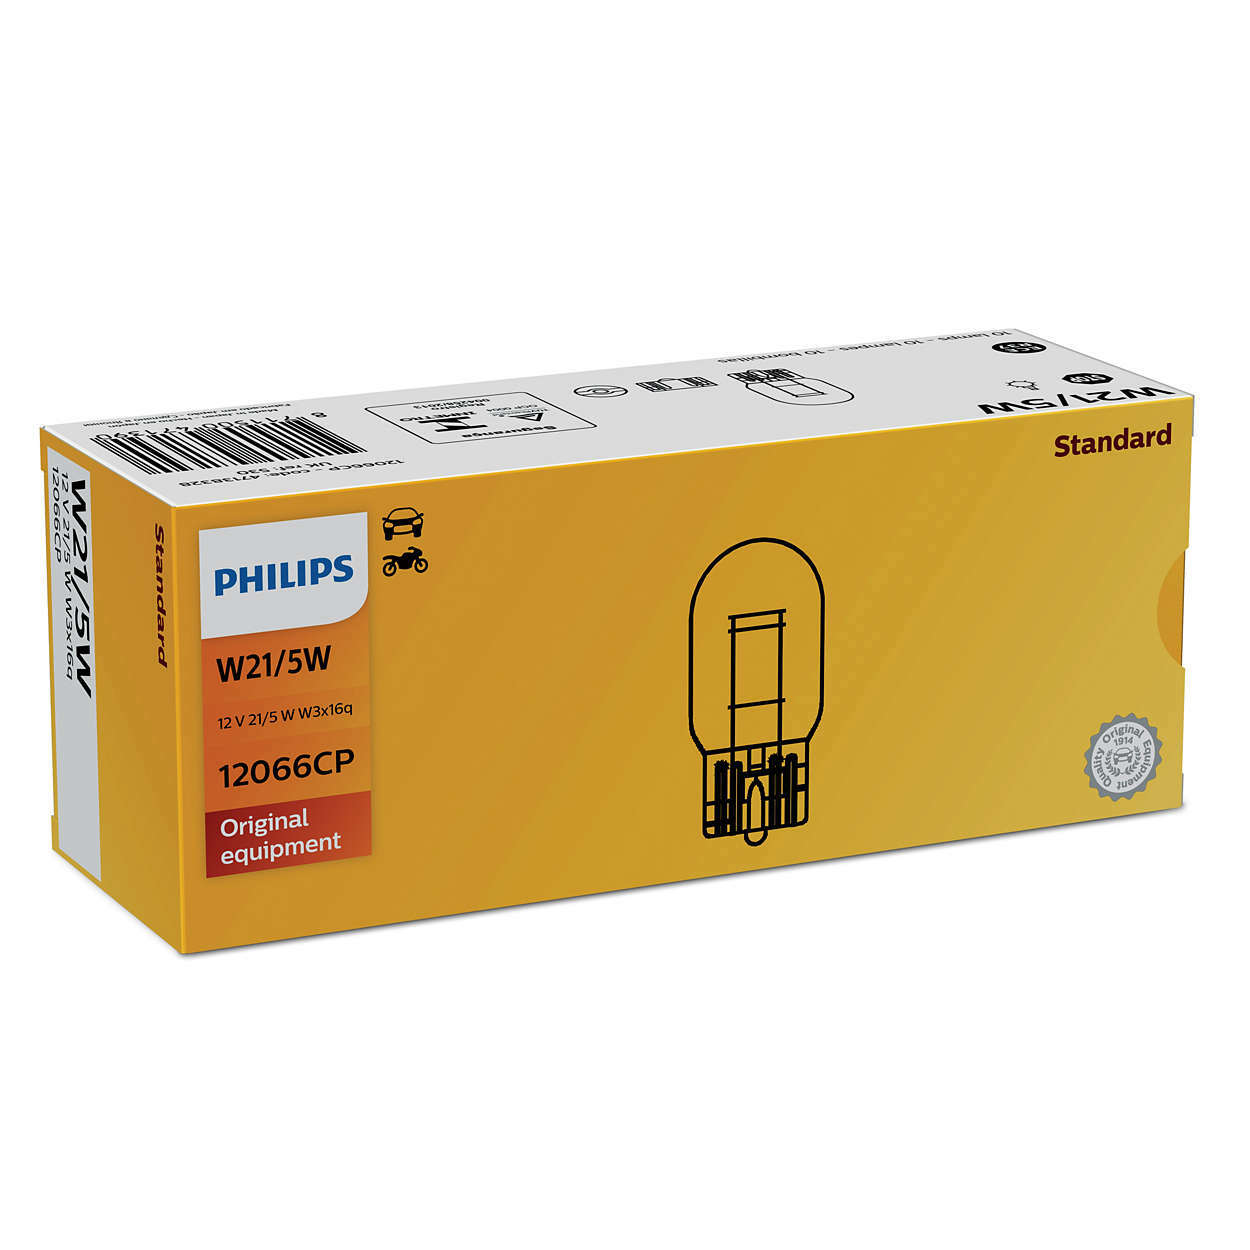 Philips /5W 7443 T20 OEM Repalcement Light Bulb